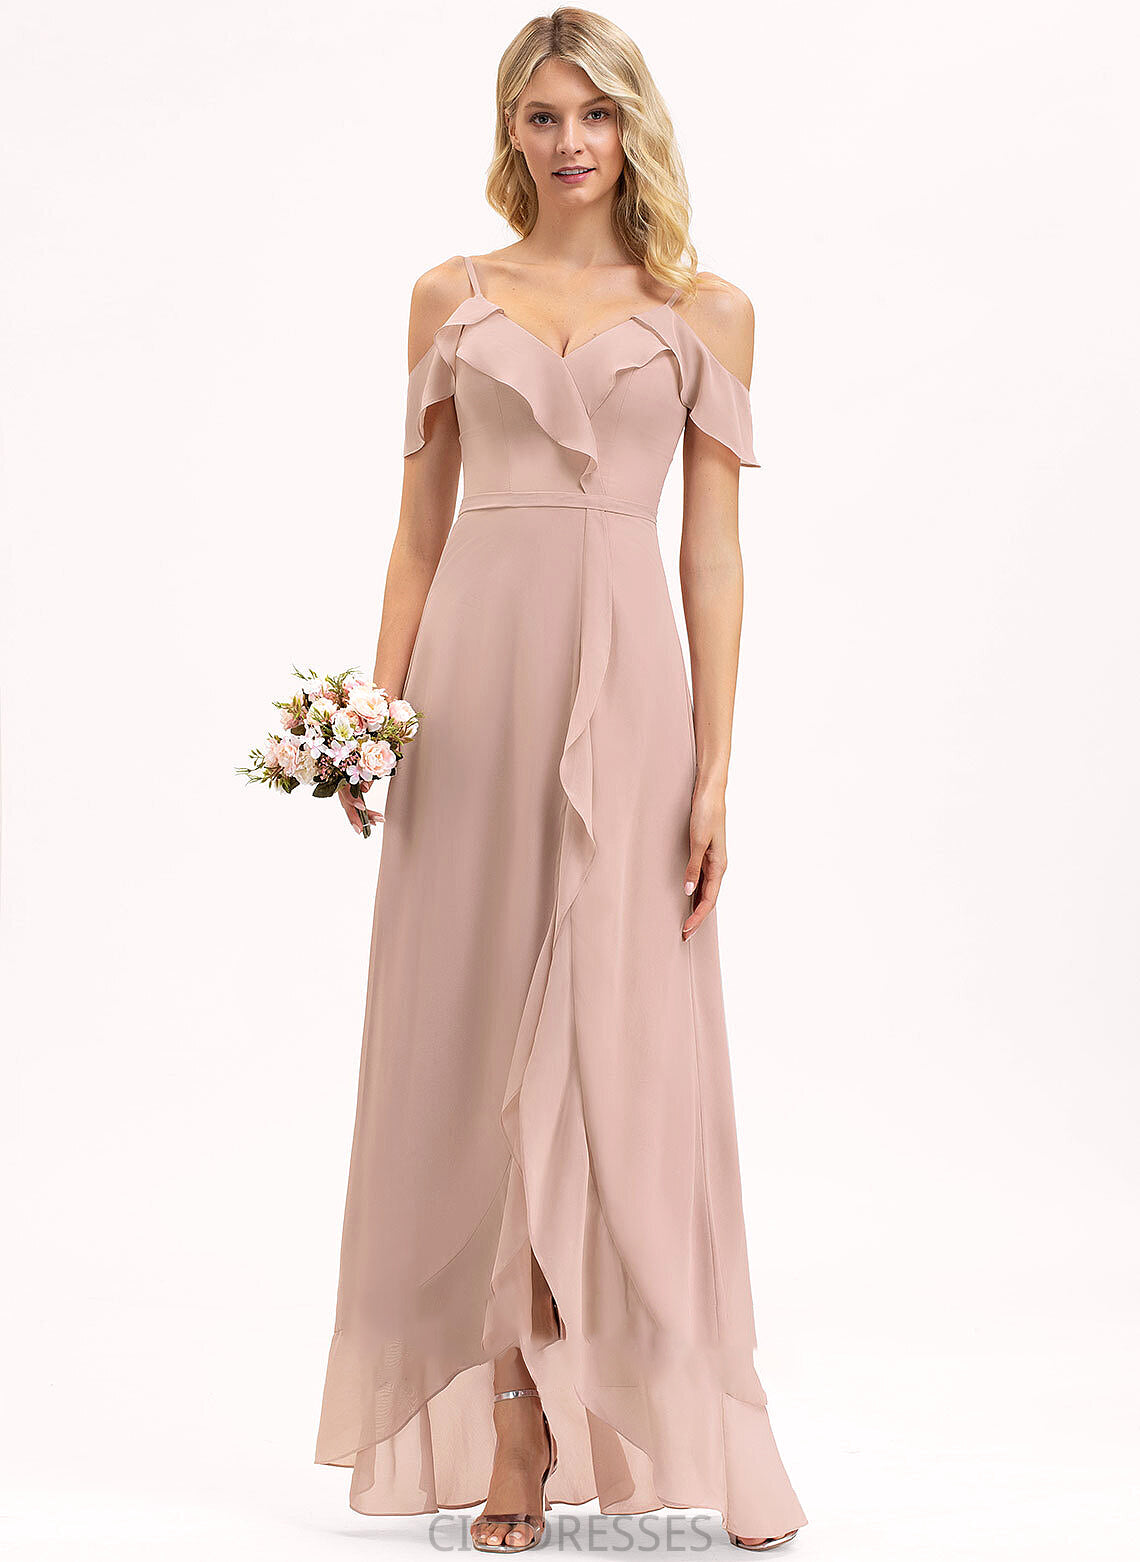 Neckline CascadingRuffles Fabric V-neck Embellishment A-Line Length Silhouette Asymmetrical Aubrie Velvet Sleeveless Bridesmaid Dresses